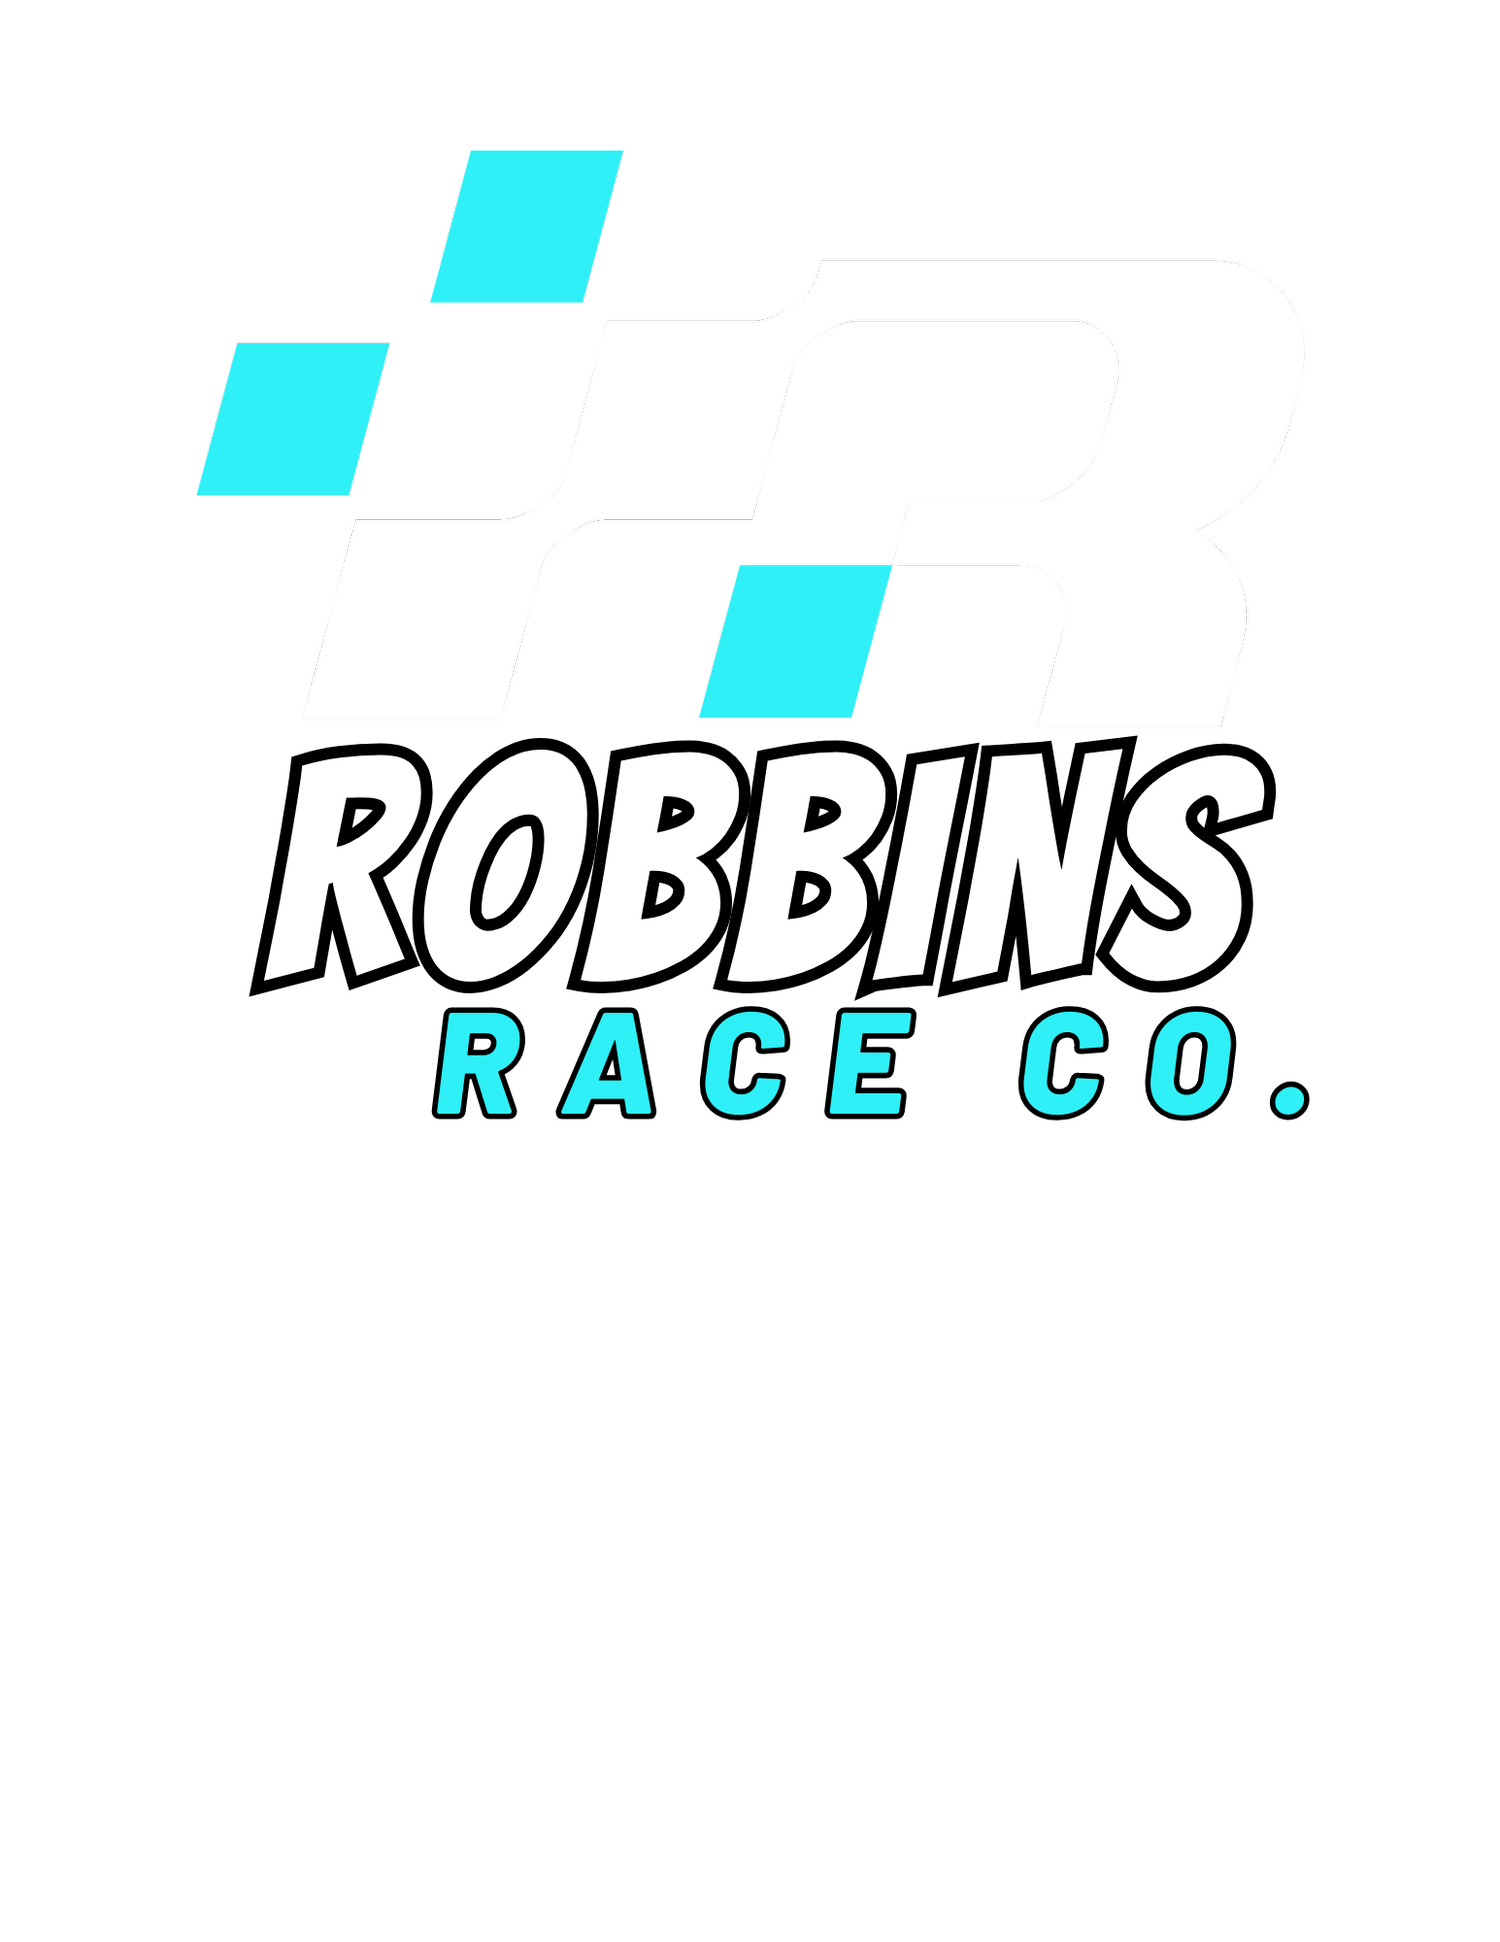 Robbins Race Co